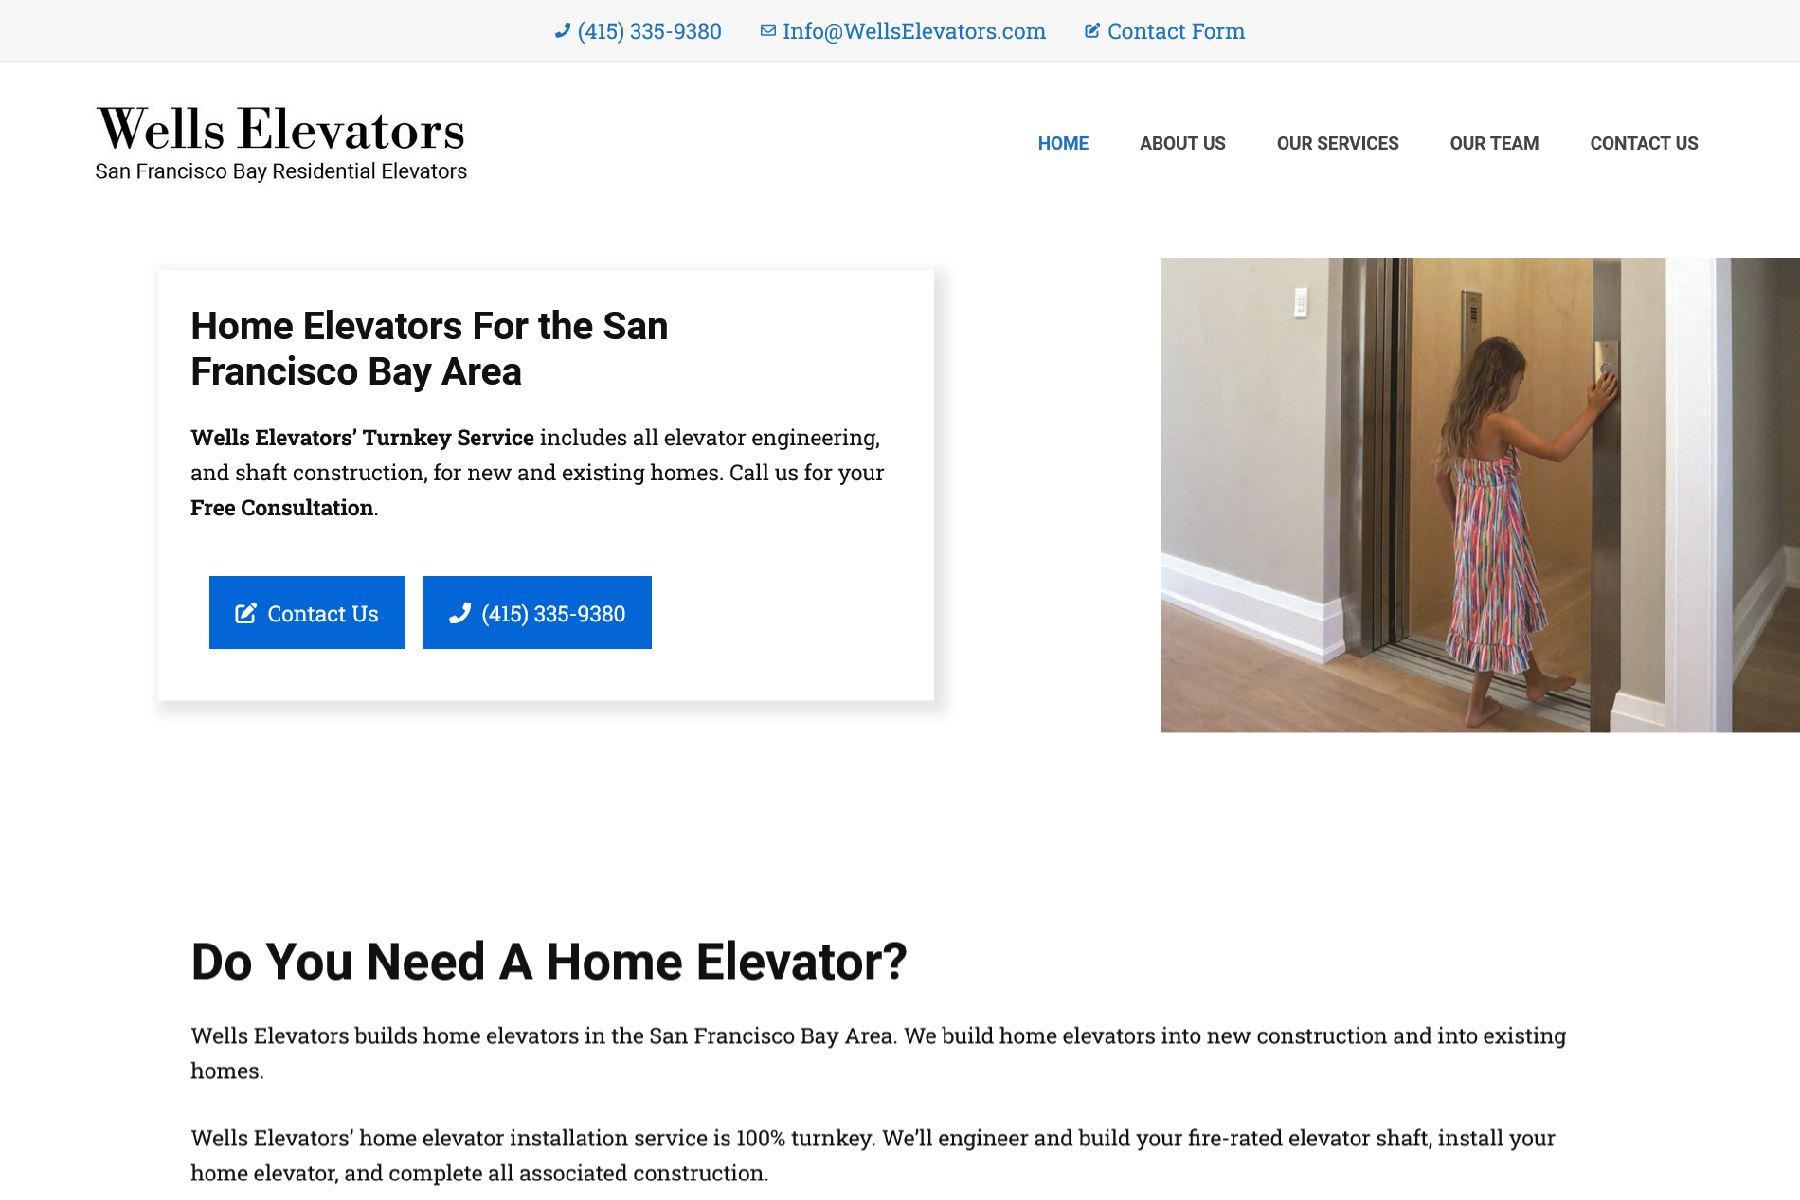 WellsElevators.com is the Website of an Elevator Company now on hiatus